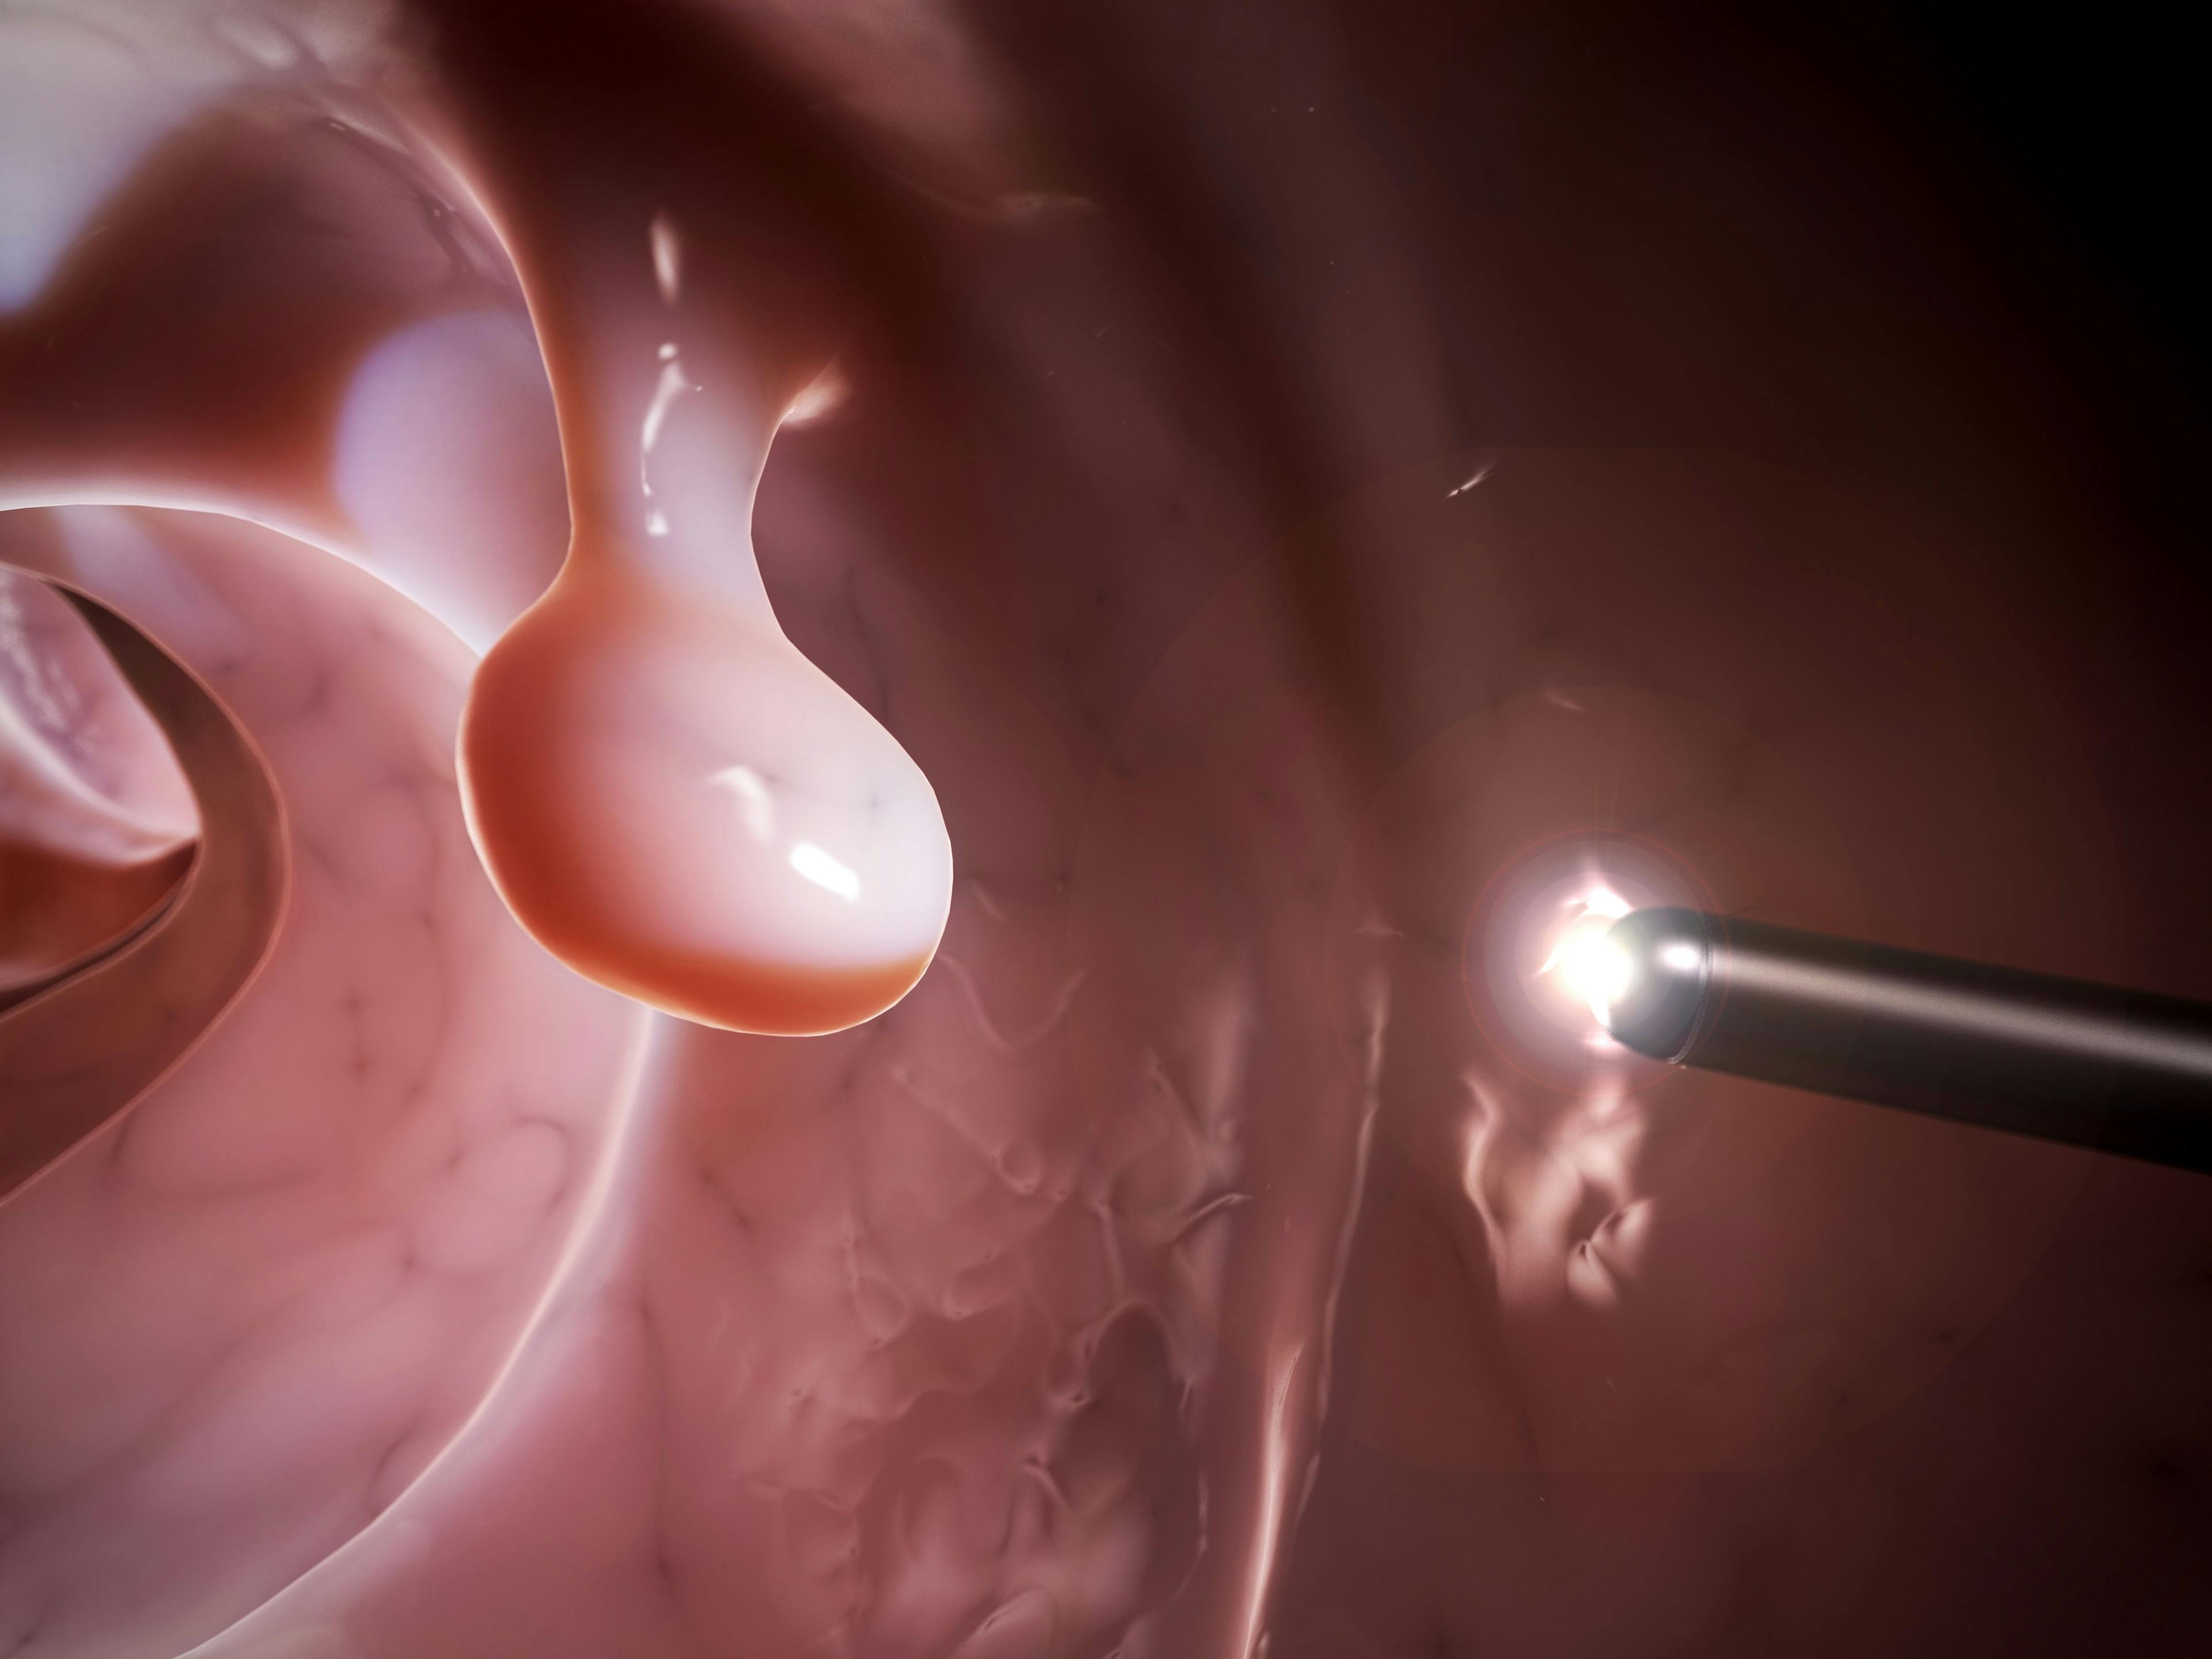 3D rendering of a colonoscopy